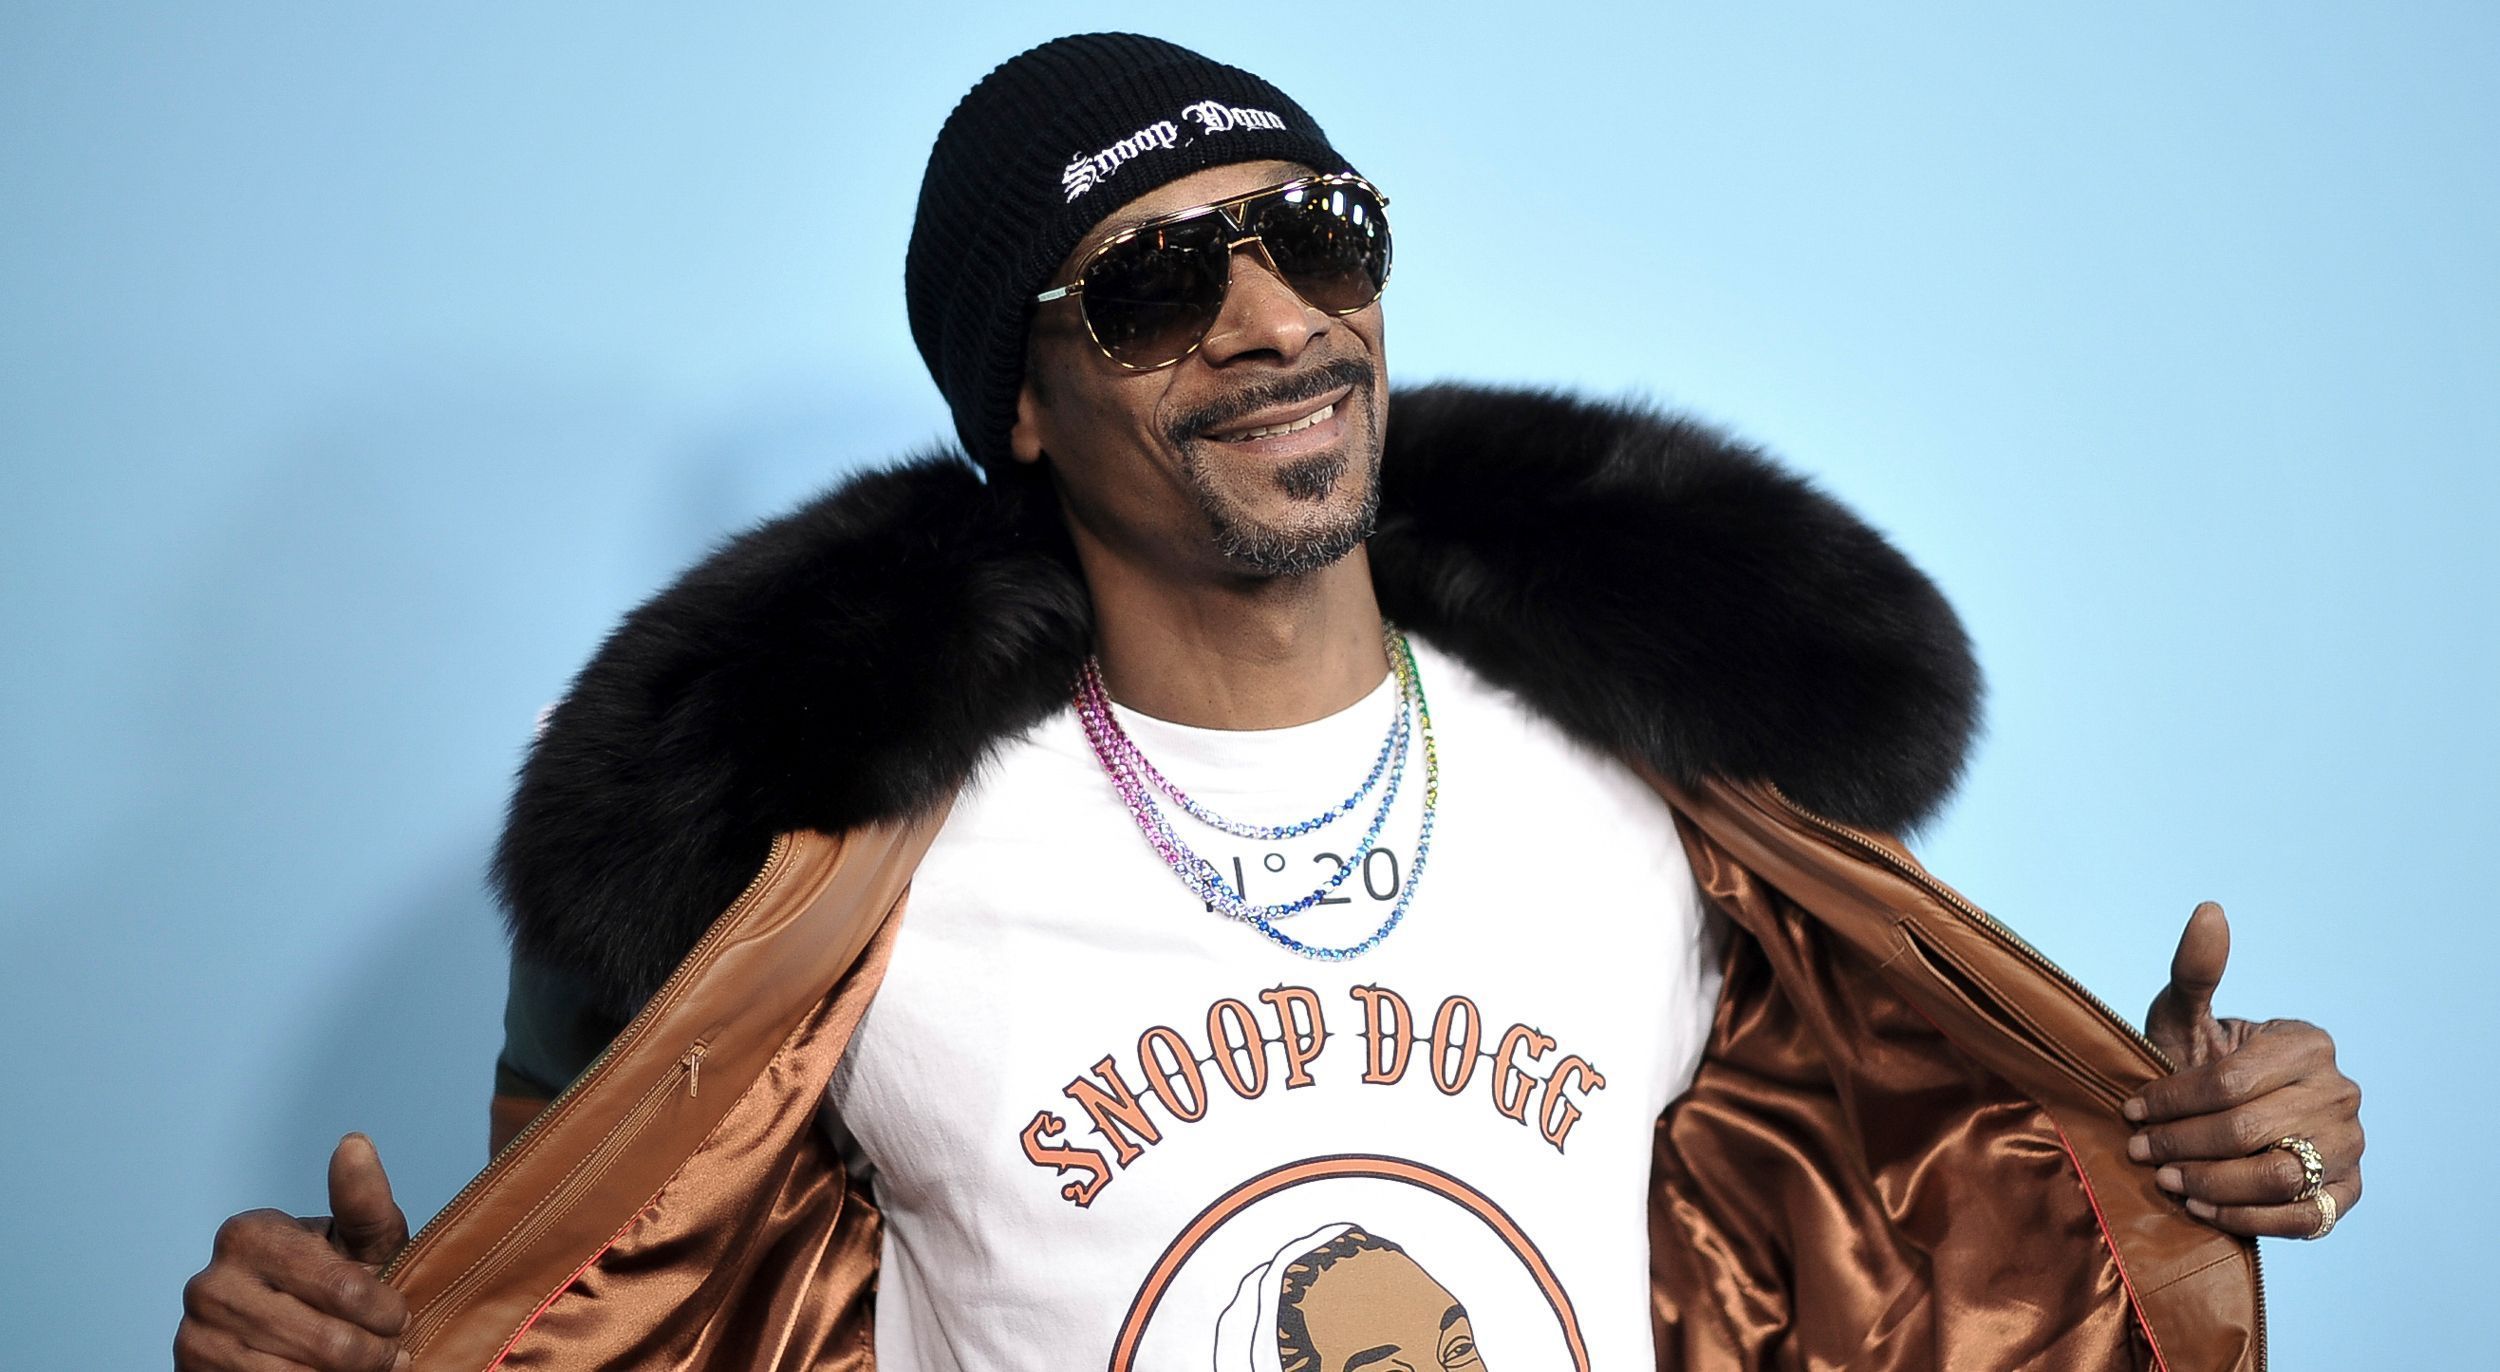 Snoop Dogg Image